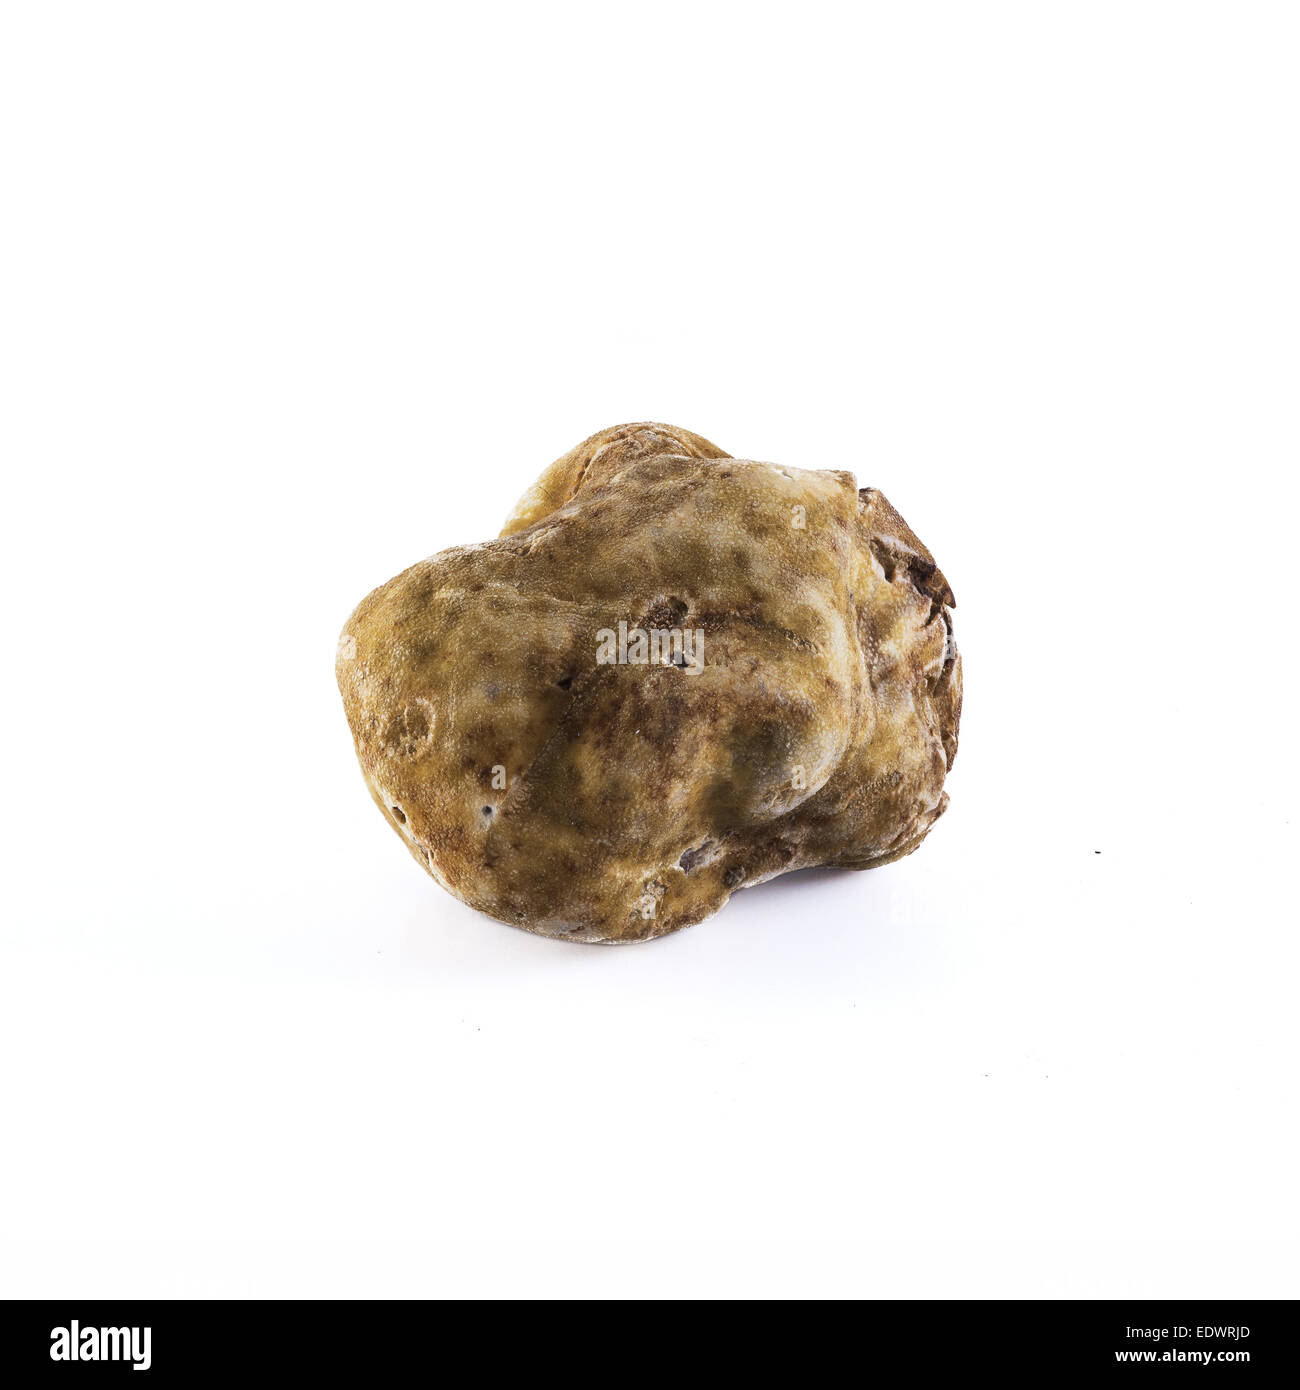 white truffle tuber magnatum pico from Alba, italy Stock Photo